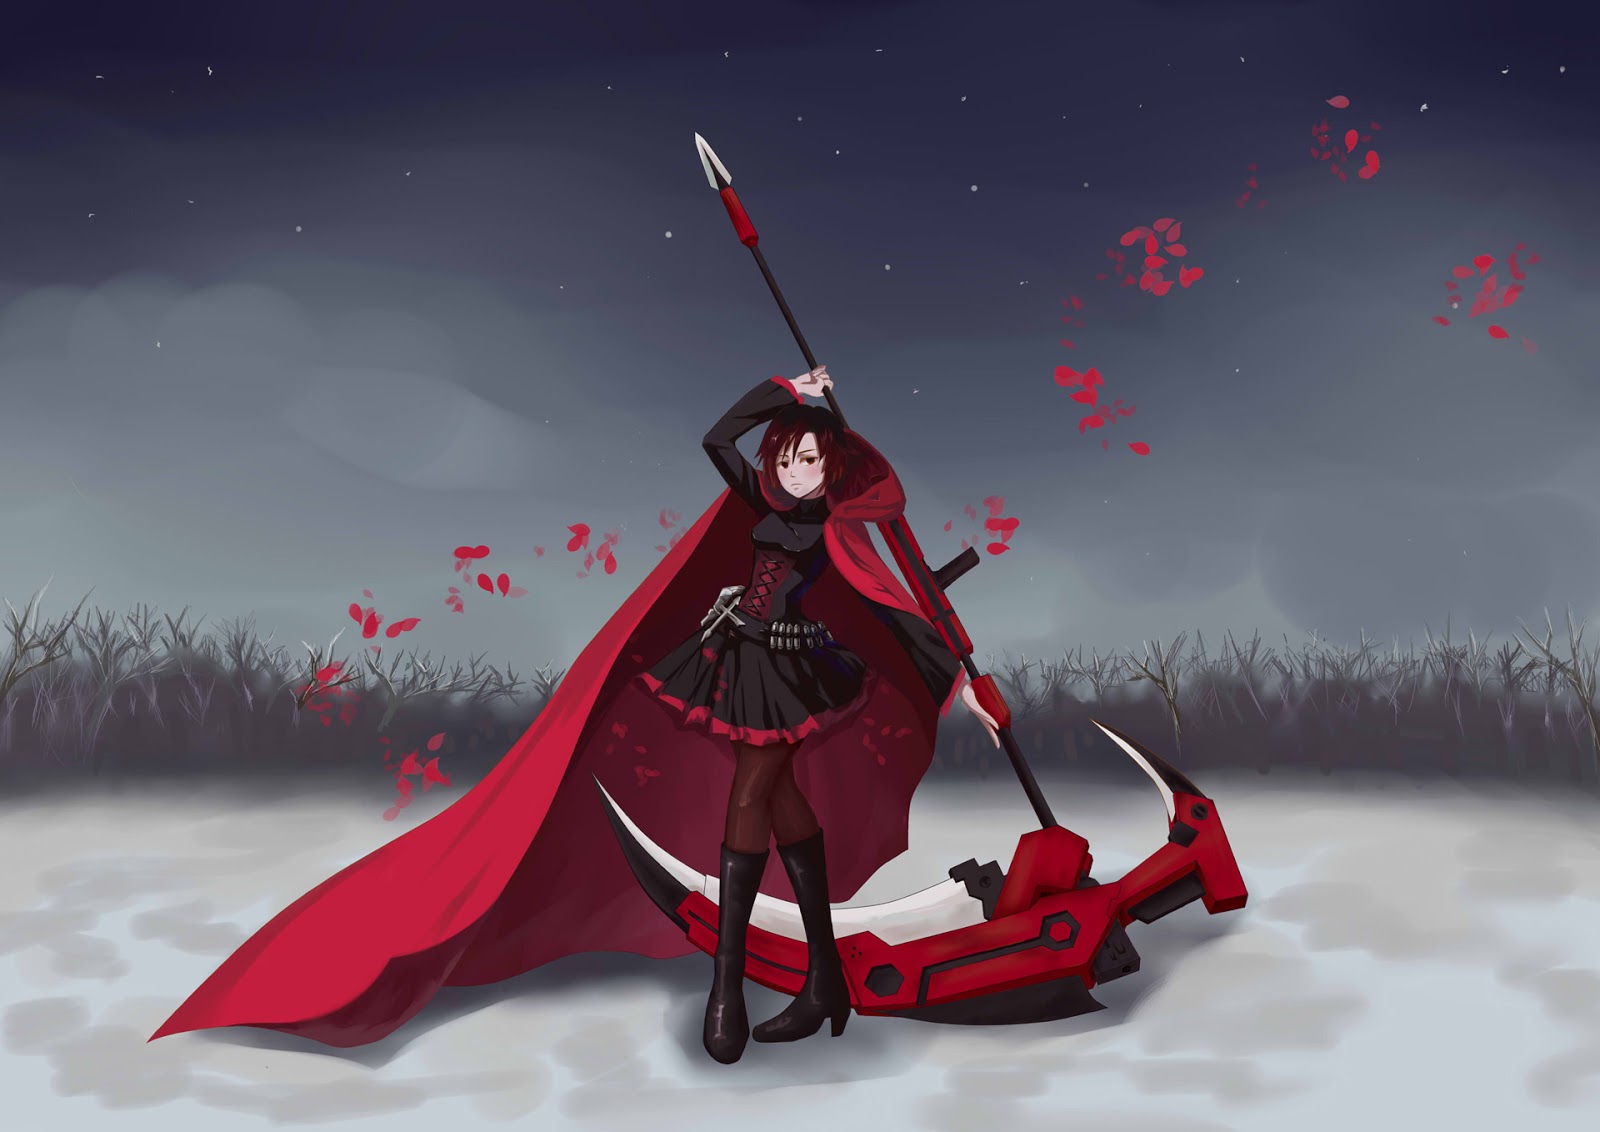 Rose Rwby Anime Girl Red Cape Death Scythe Black